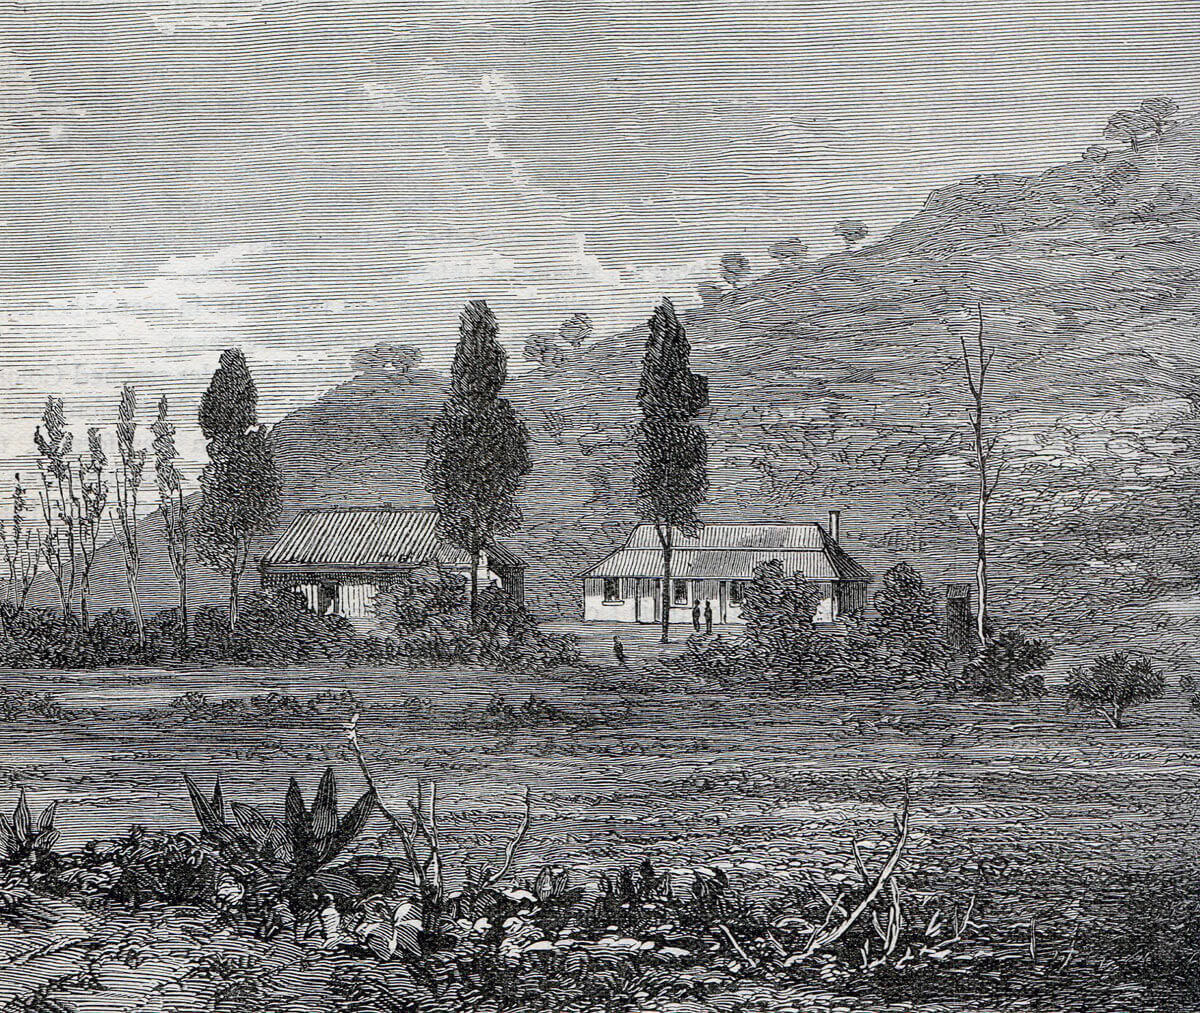 Rorke's Drift Mission Station before the Zulu attack: Battle of Rorke's Drift on 22nd January 1879 in the Zulu War